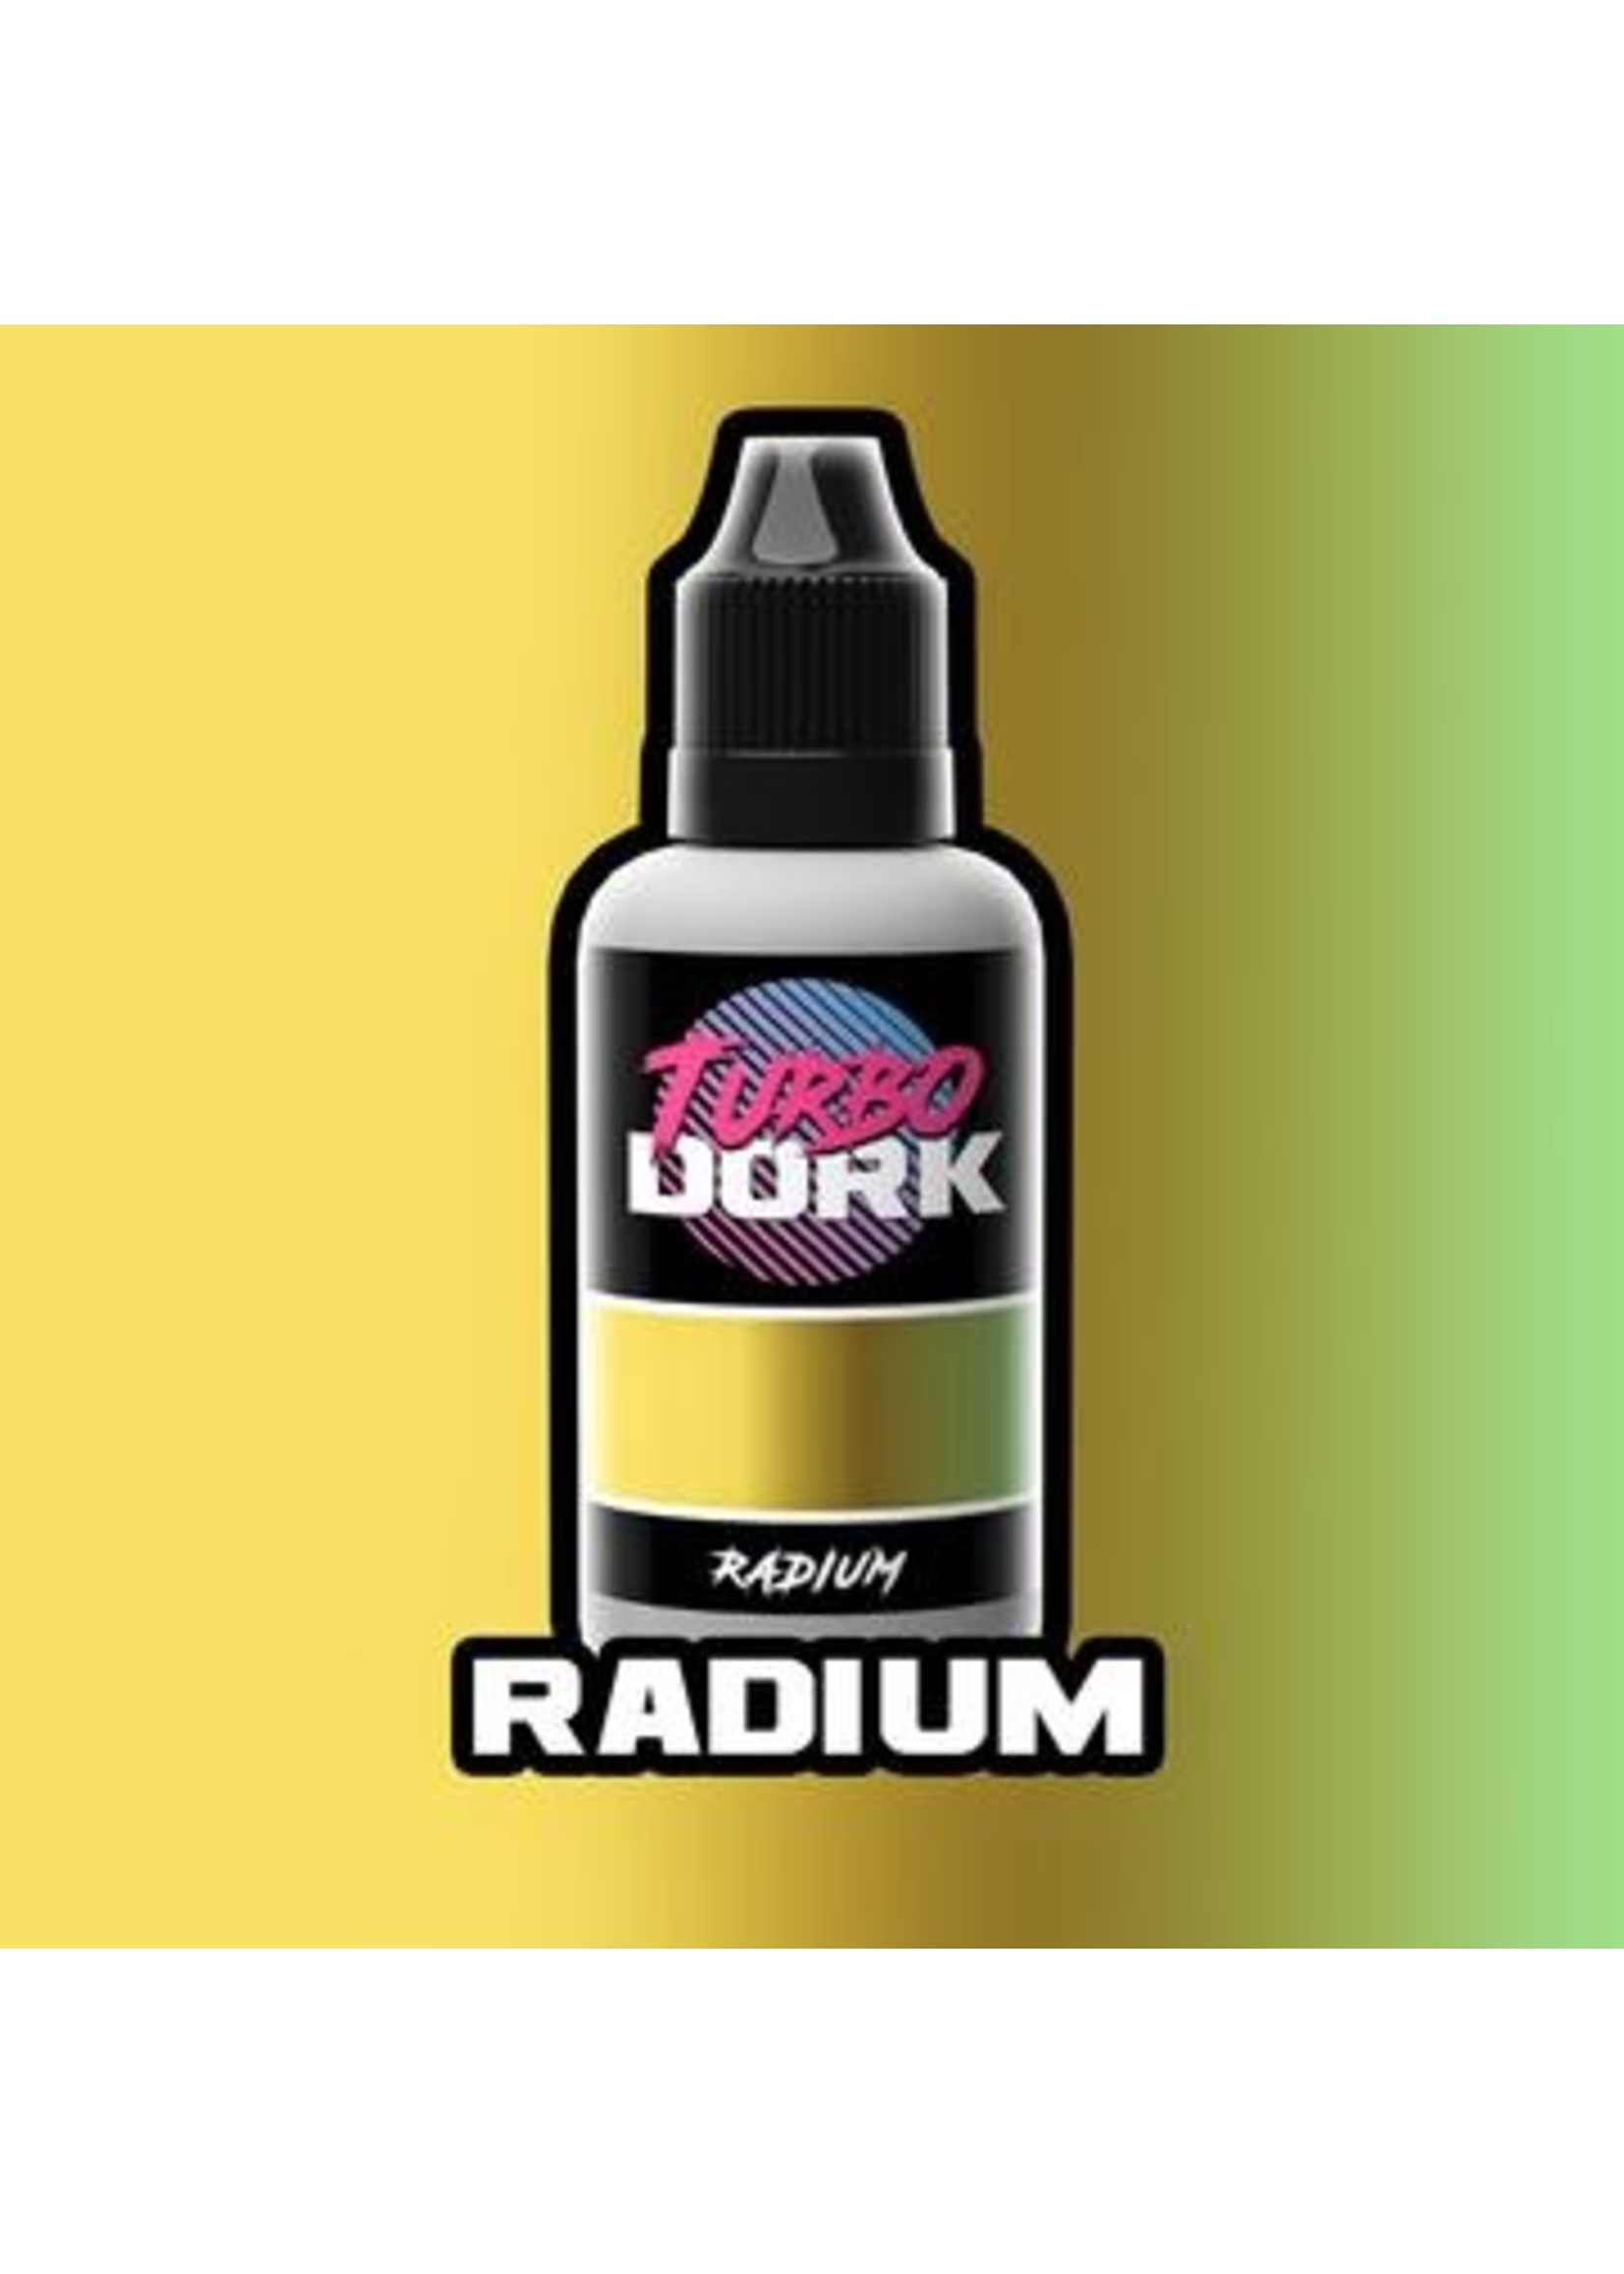 Turbo Dork Radium Turboshift Acrylic Paint - 20ml Bottle